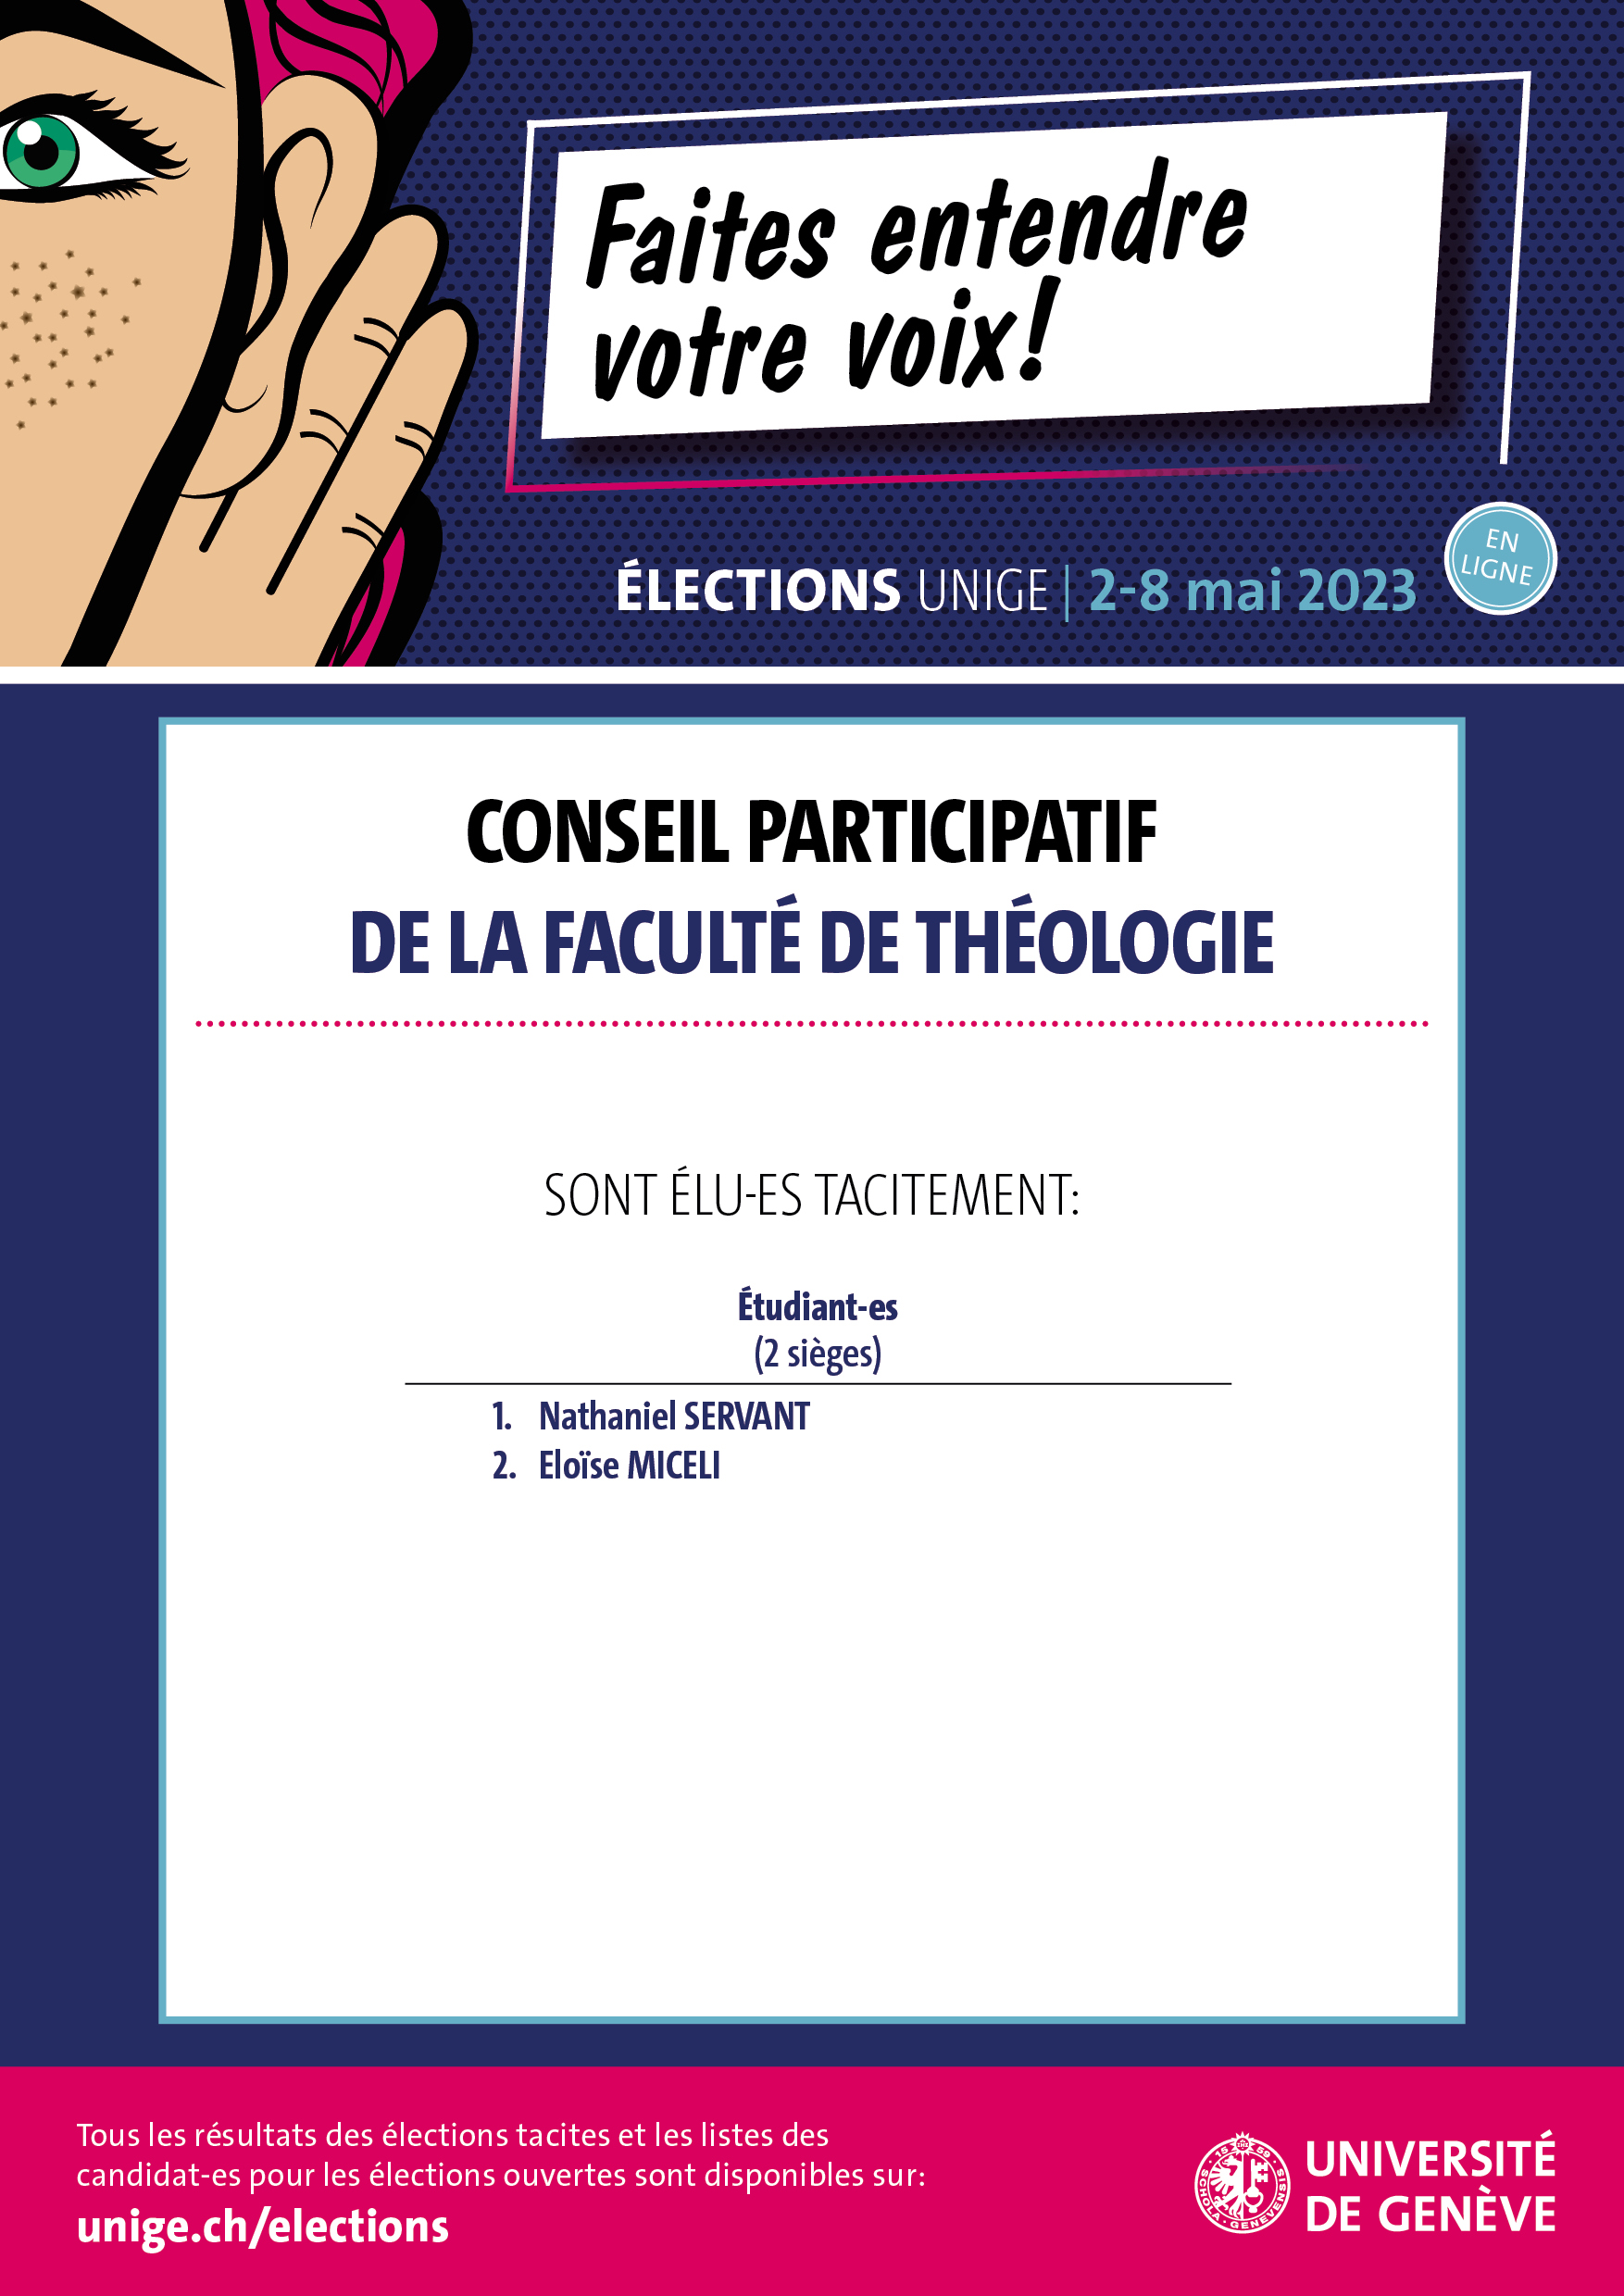 A3-ElectionsUNIGE-ListesTacites-2023-Theologie.jpg